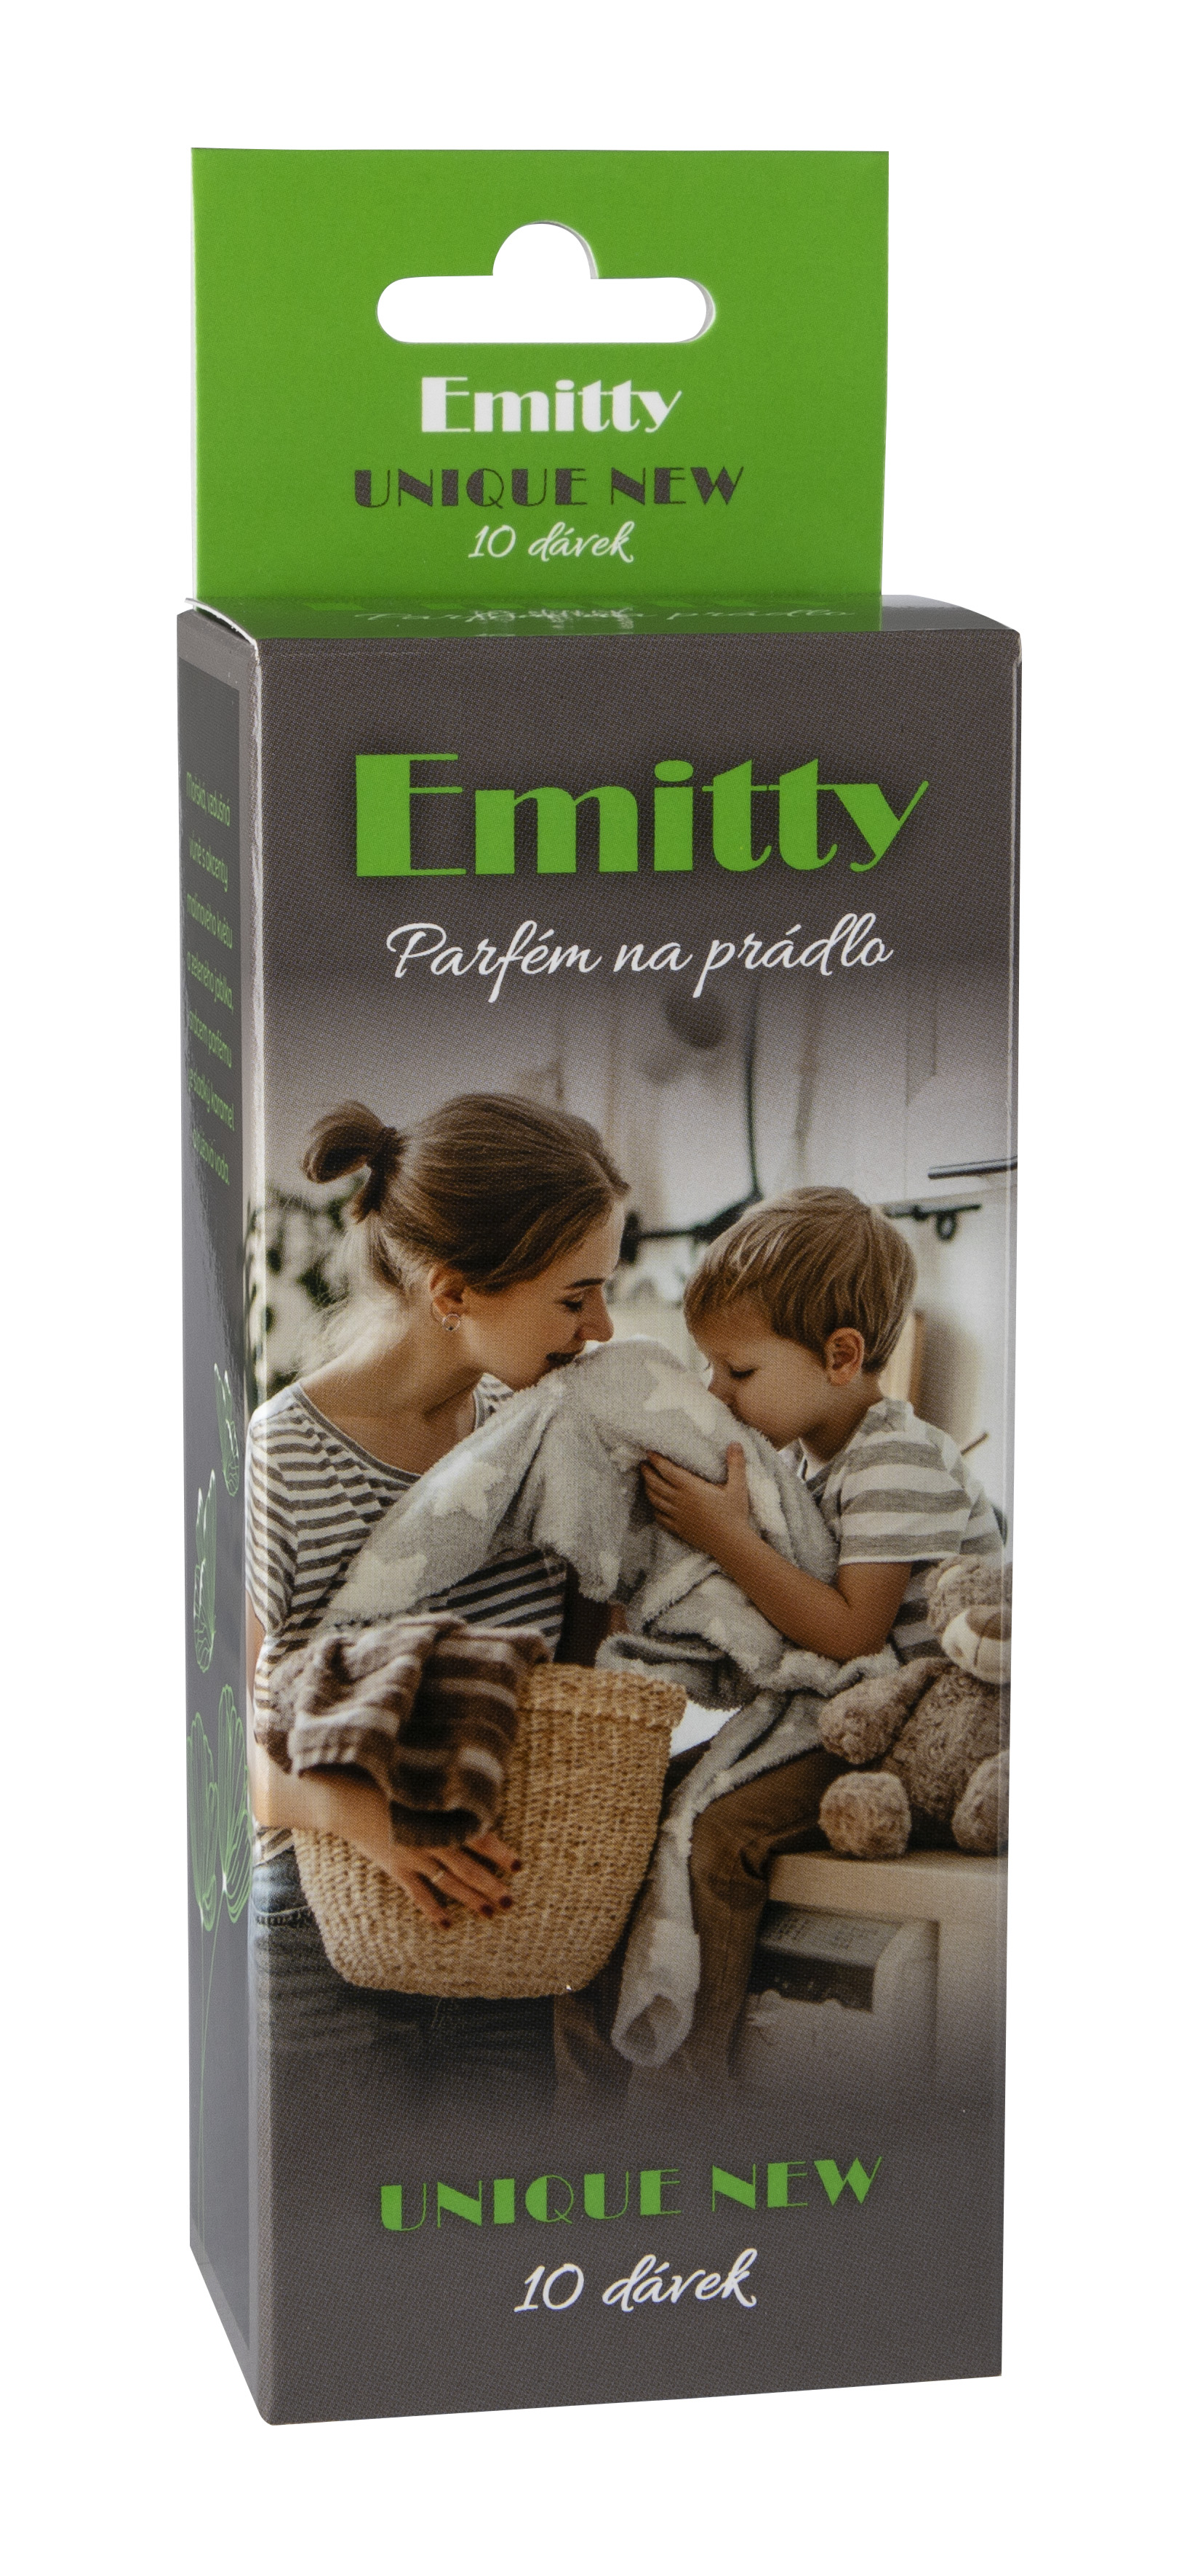 Emitty parfém na prádlo Unique New 10 dávek 10 ml